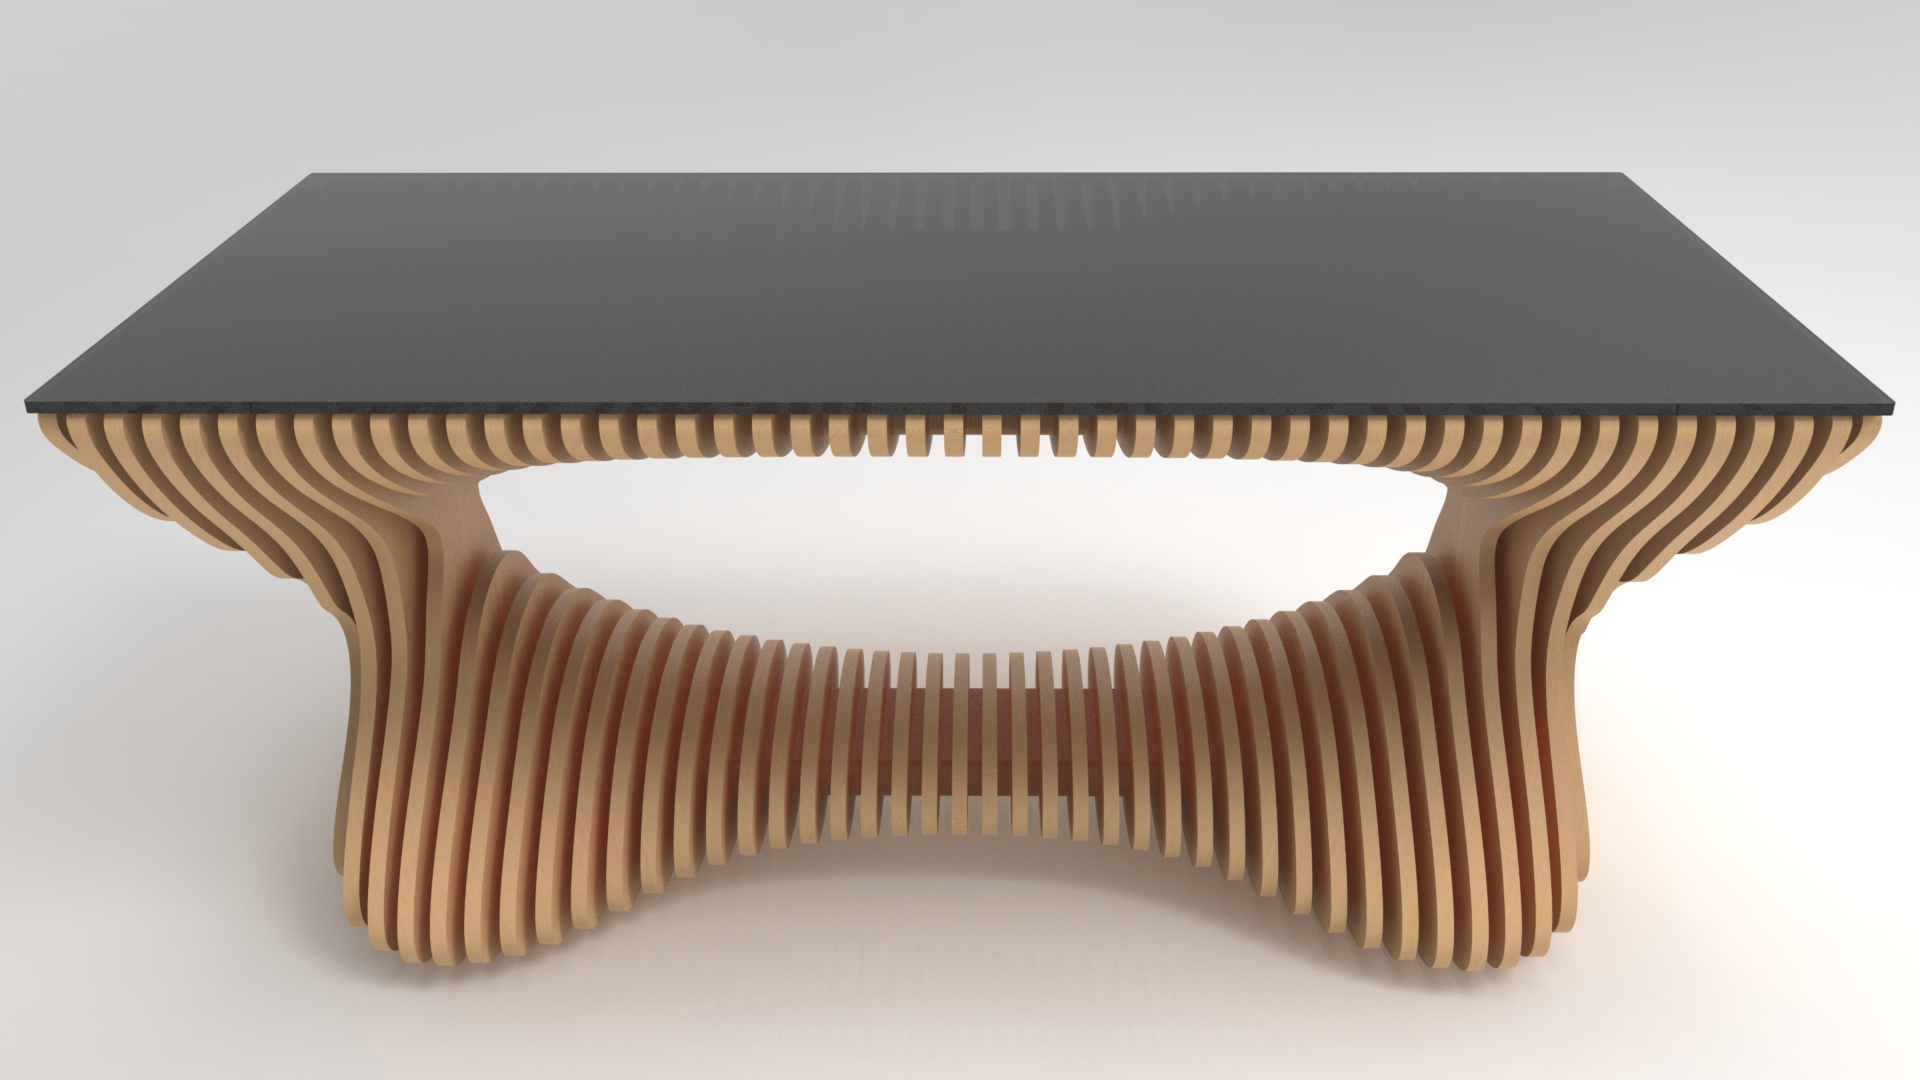 Стол гнутый. Мебель фанеры Параметрика. Параметрика из фанеры мебель. Кресло параметрическое Параметрика. Параметрическая скамейка "Bench w2".